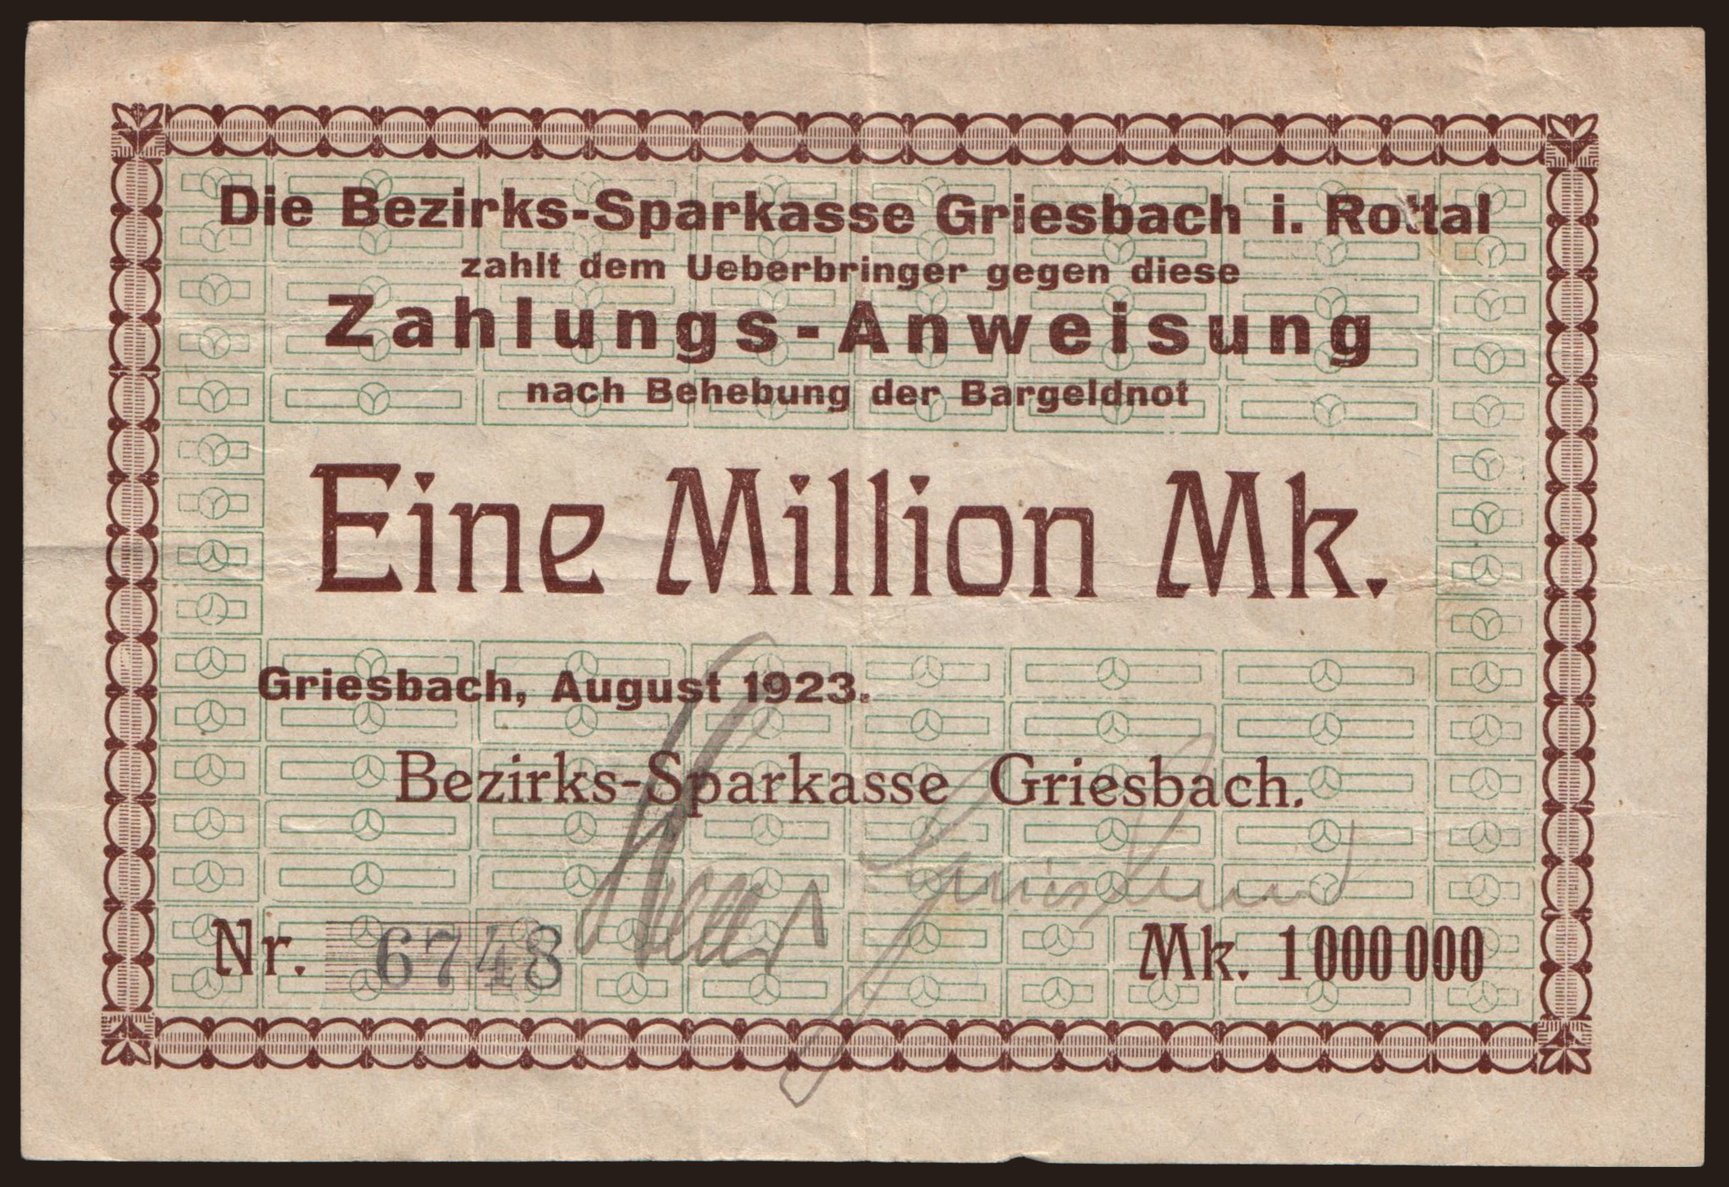 Griesbach/ Bezirks-Sparkasse, 1.000.000 Mark, 1923